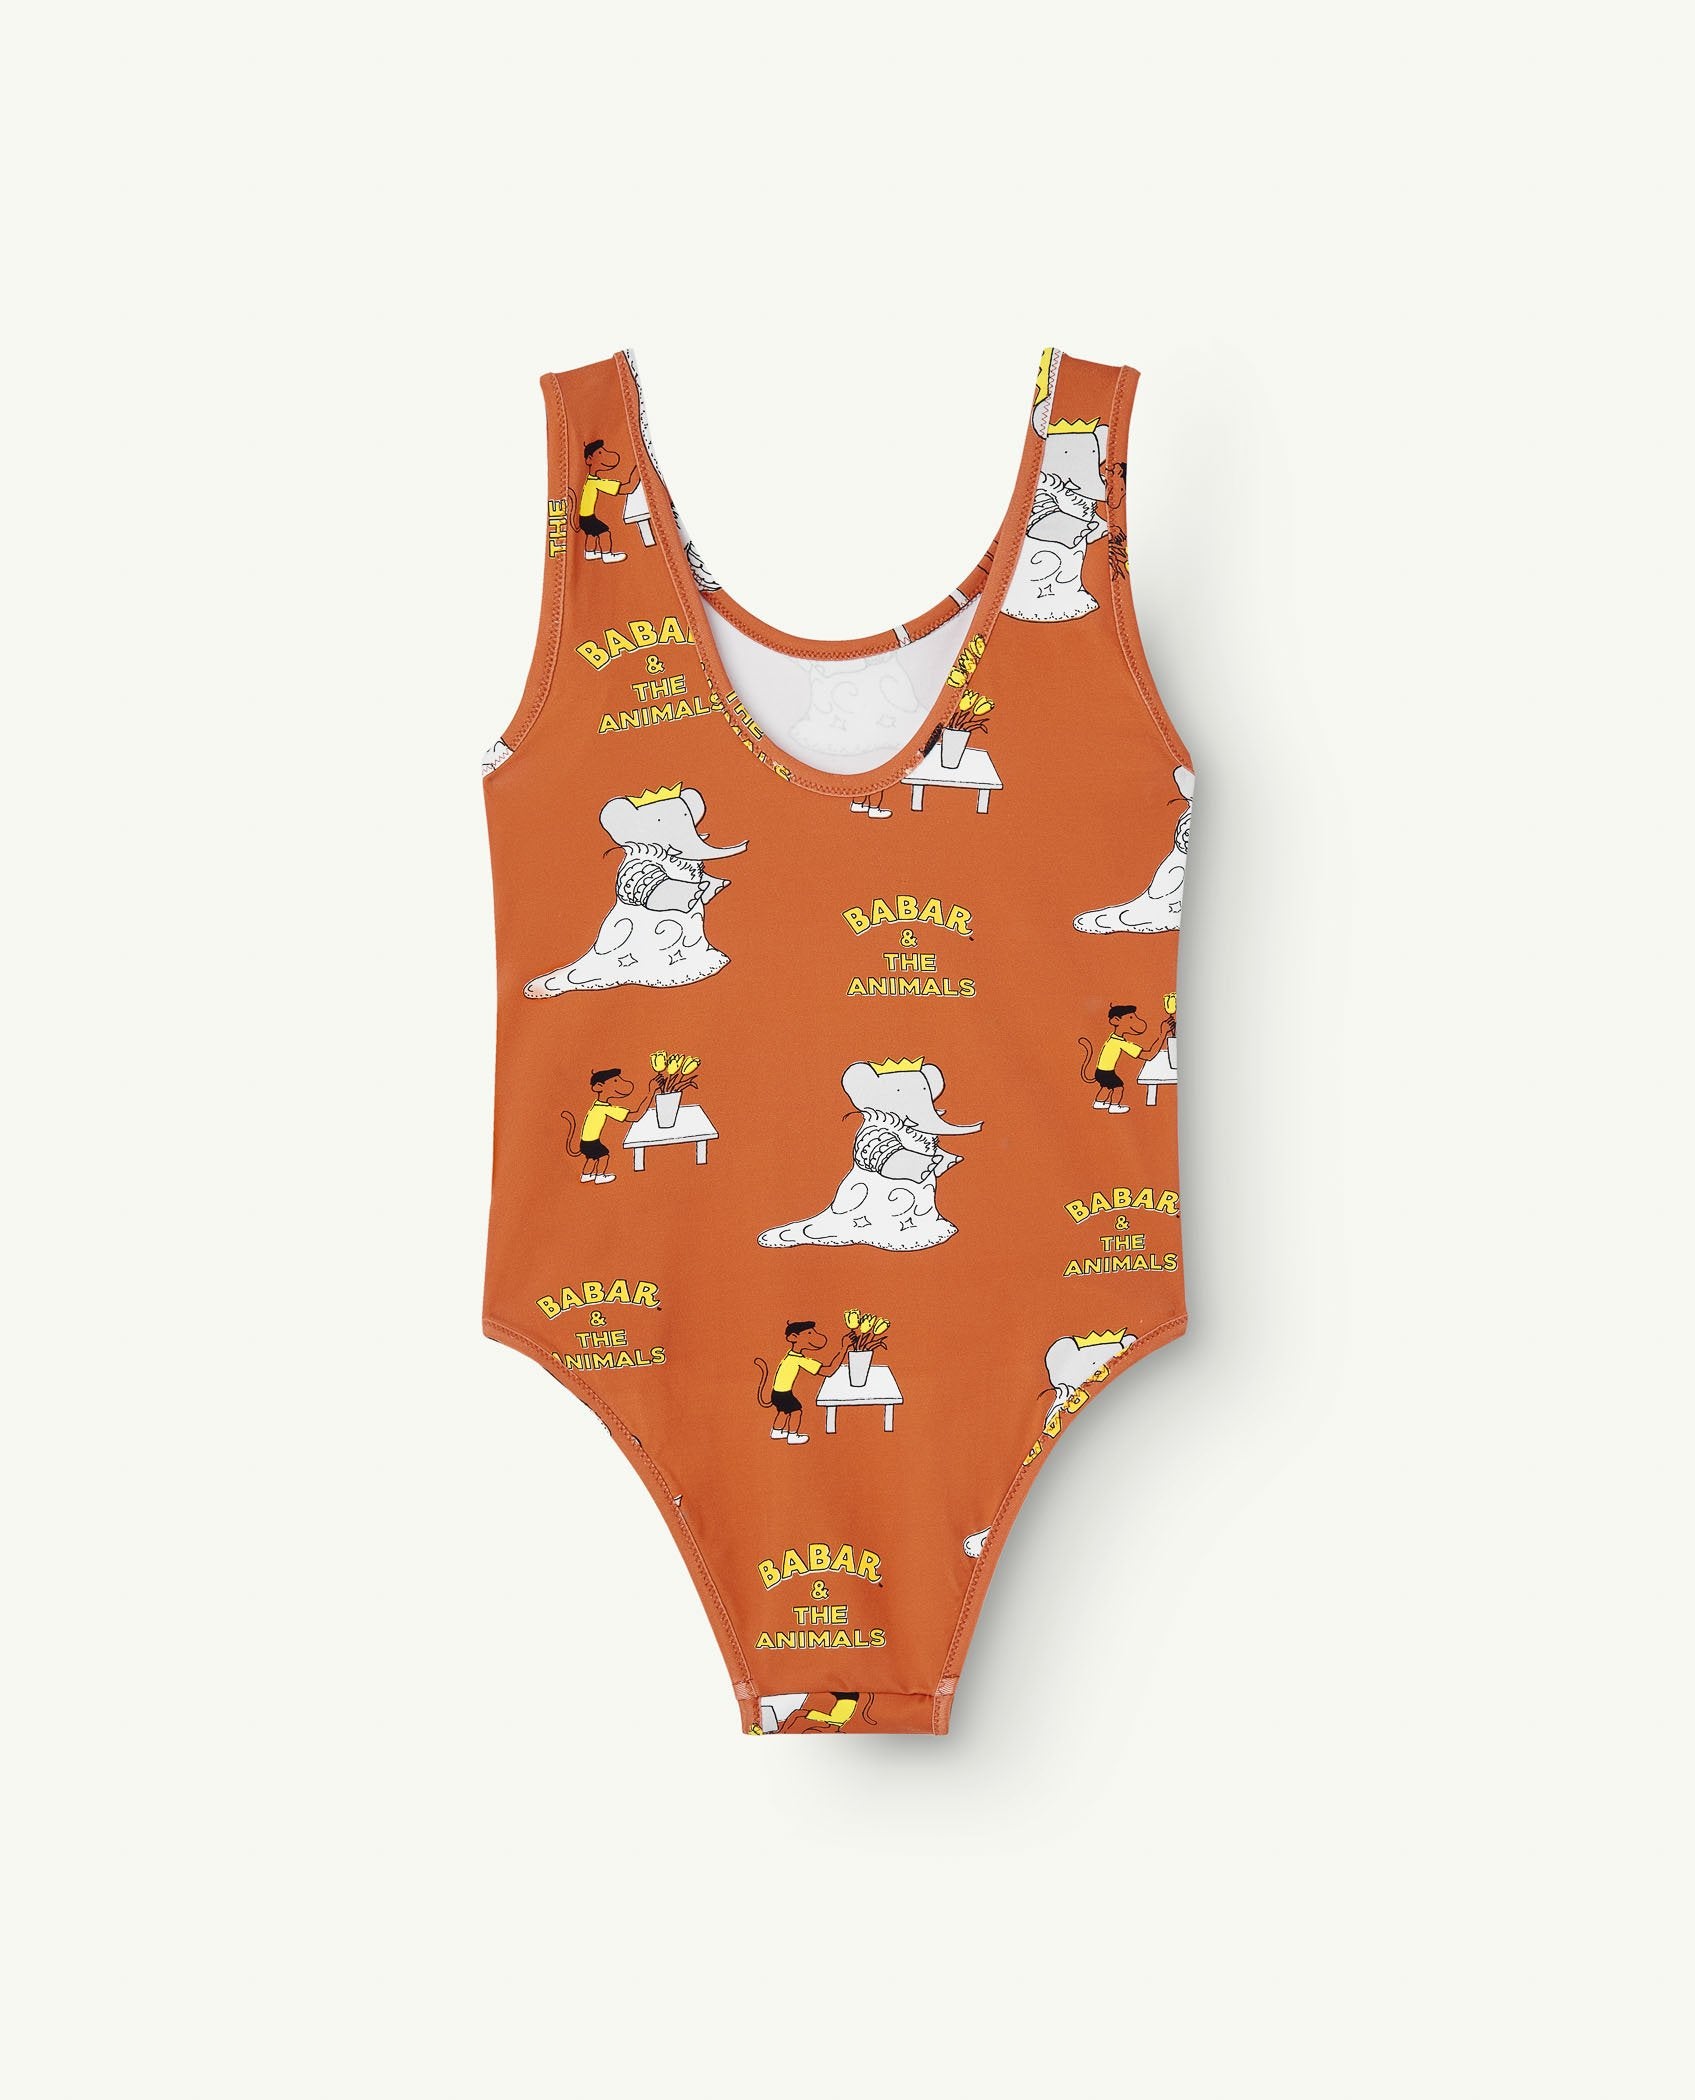 Babar Orange Trout Swimsuit PRODUCT BACK